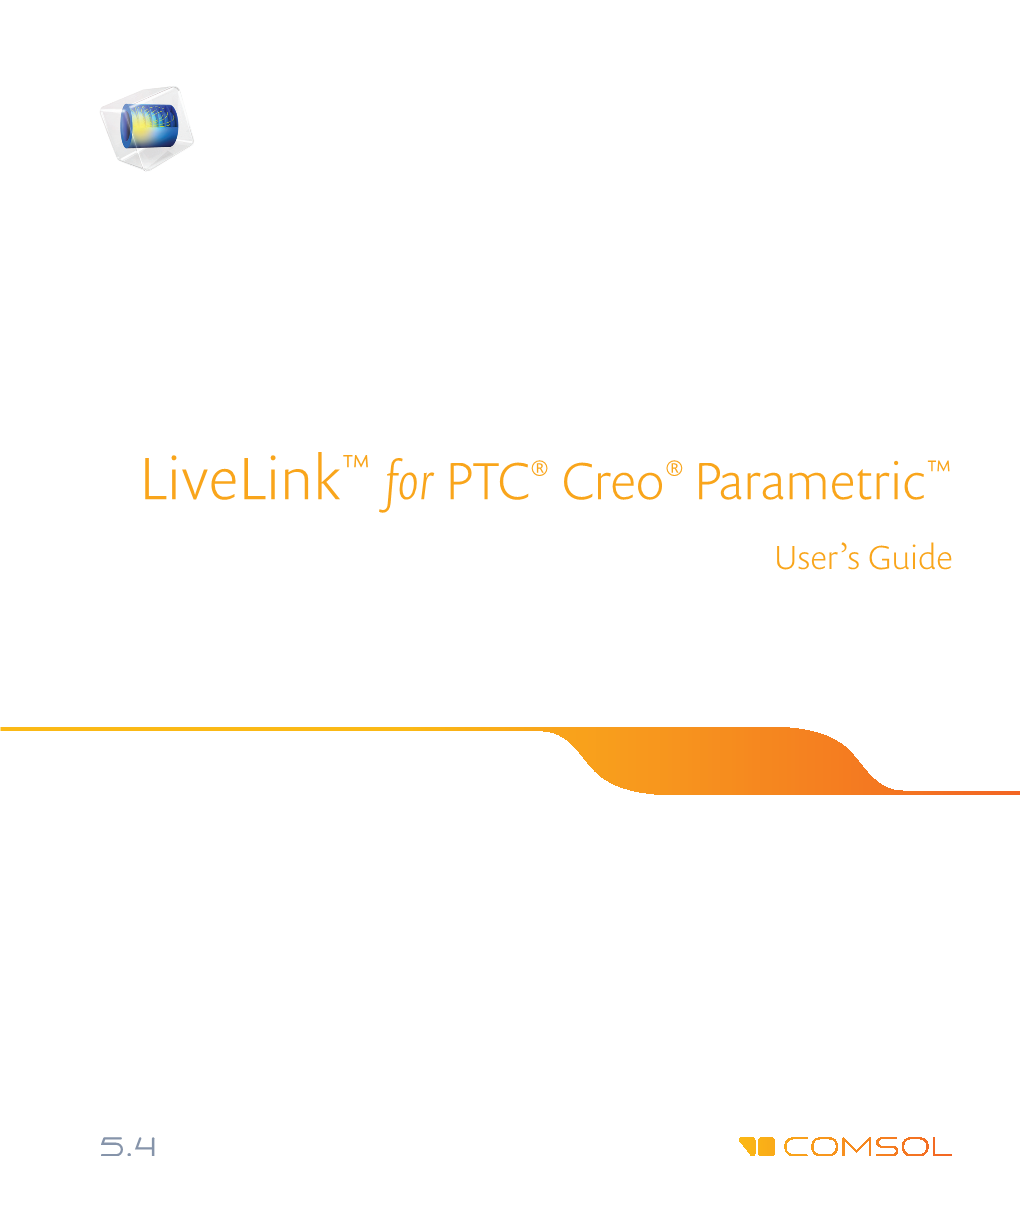 Livelink for PTC Creo Parametric User's Guide